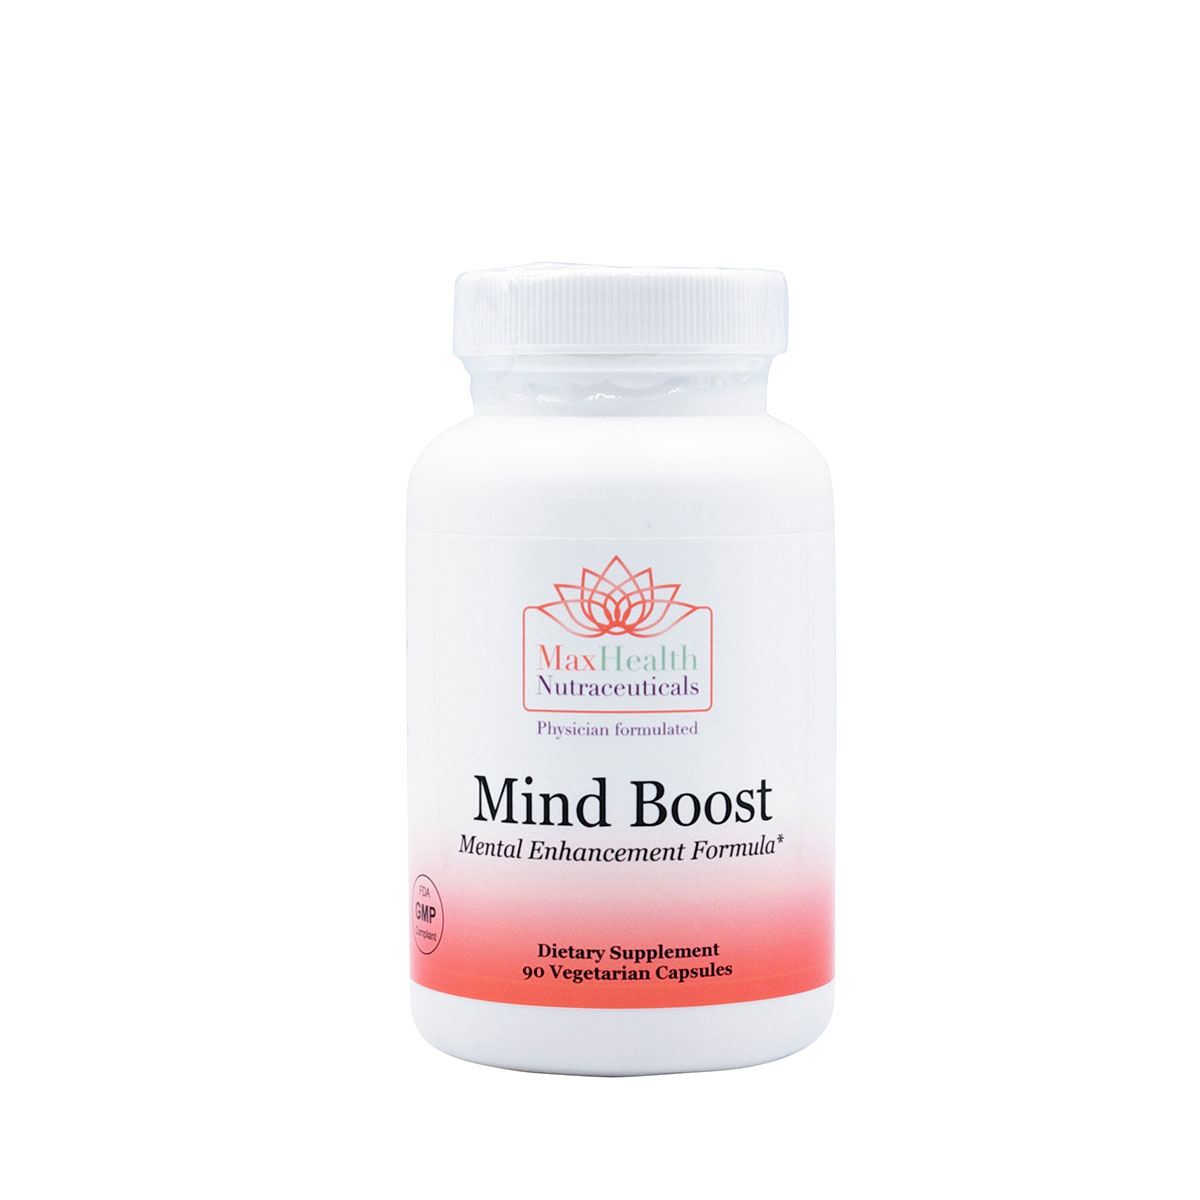 11Mind Boost Mental Enhancement Formula